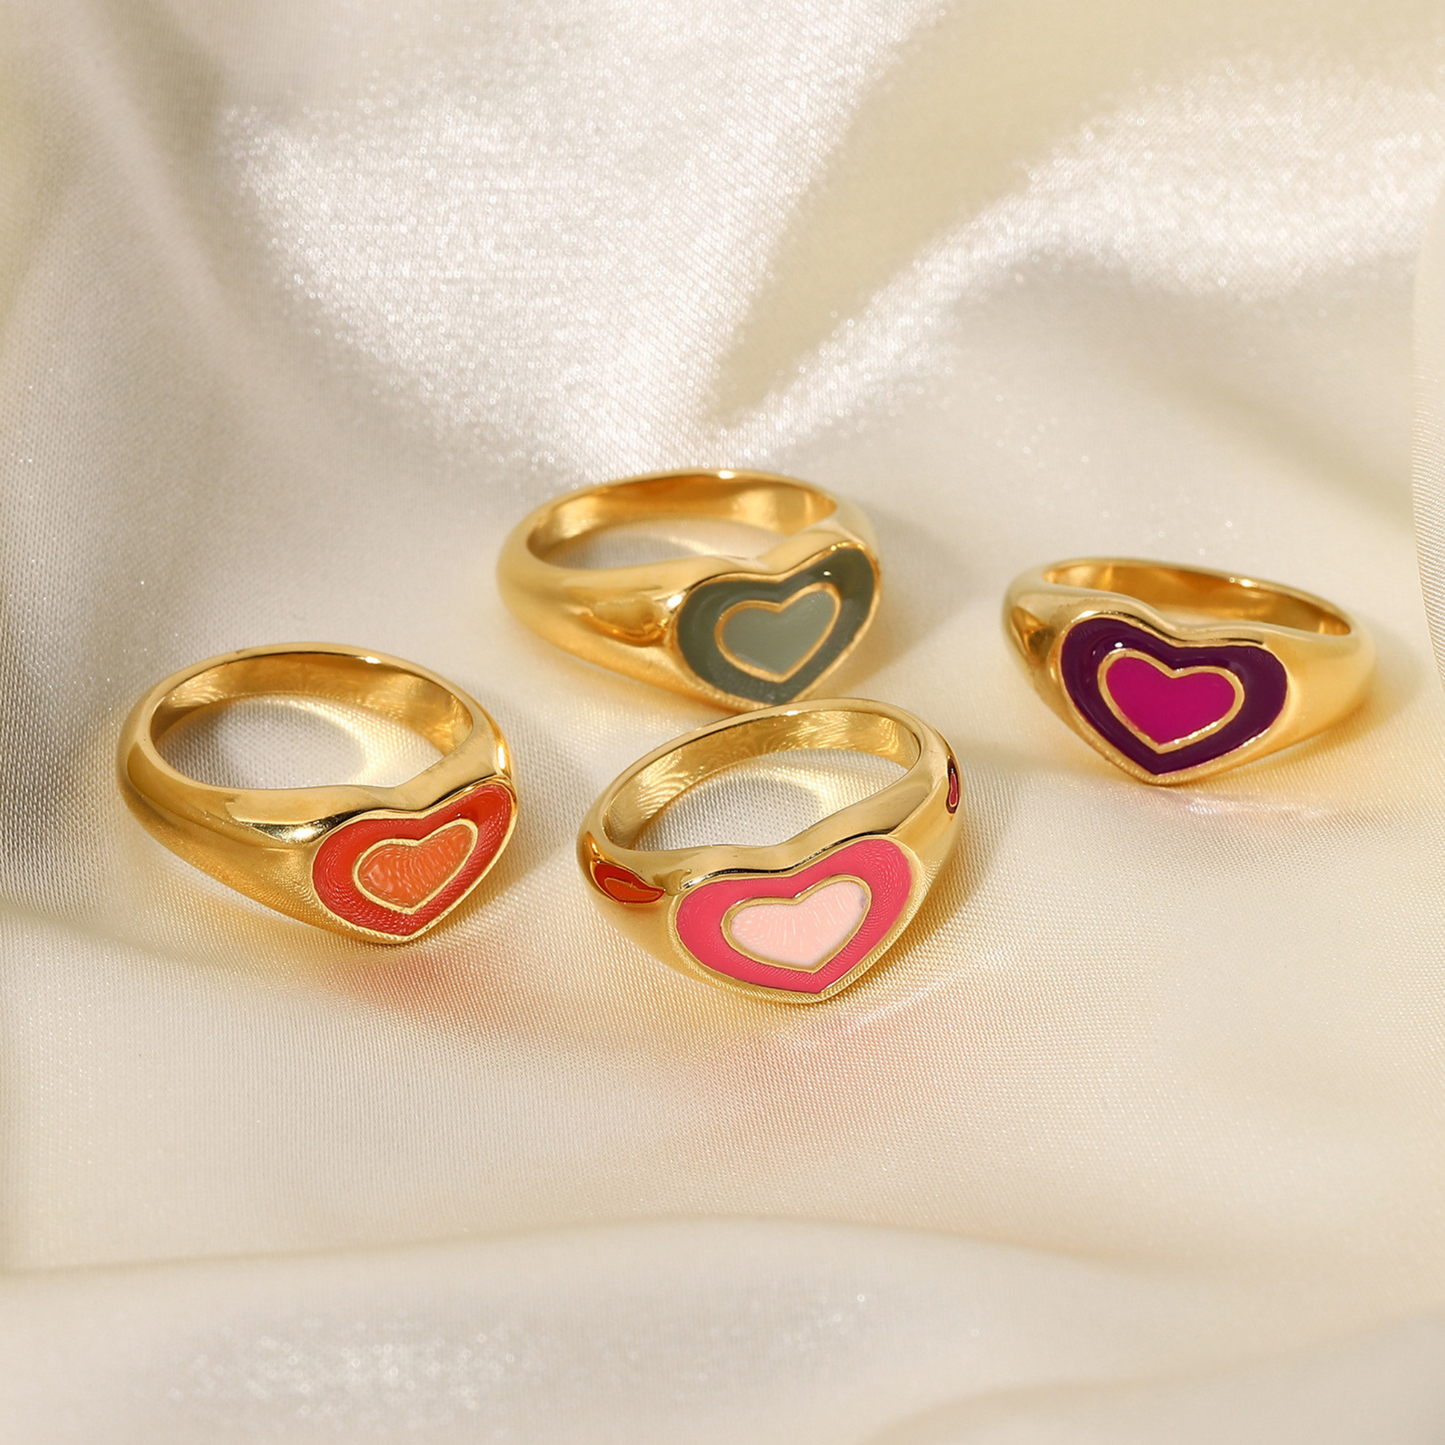 Statement Gold Heart Signet Rings for Women